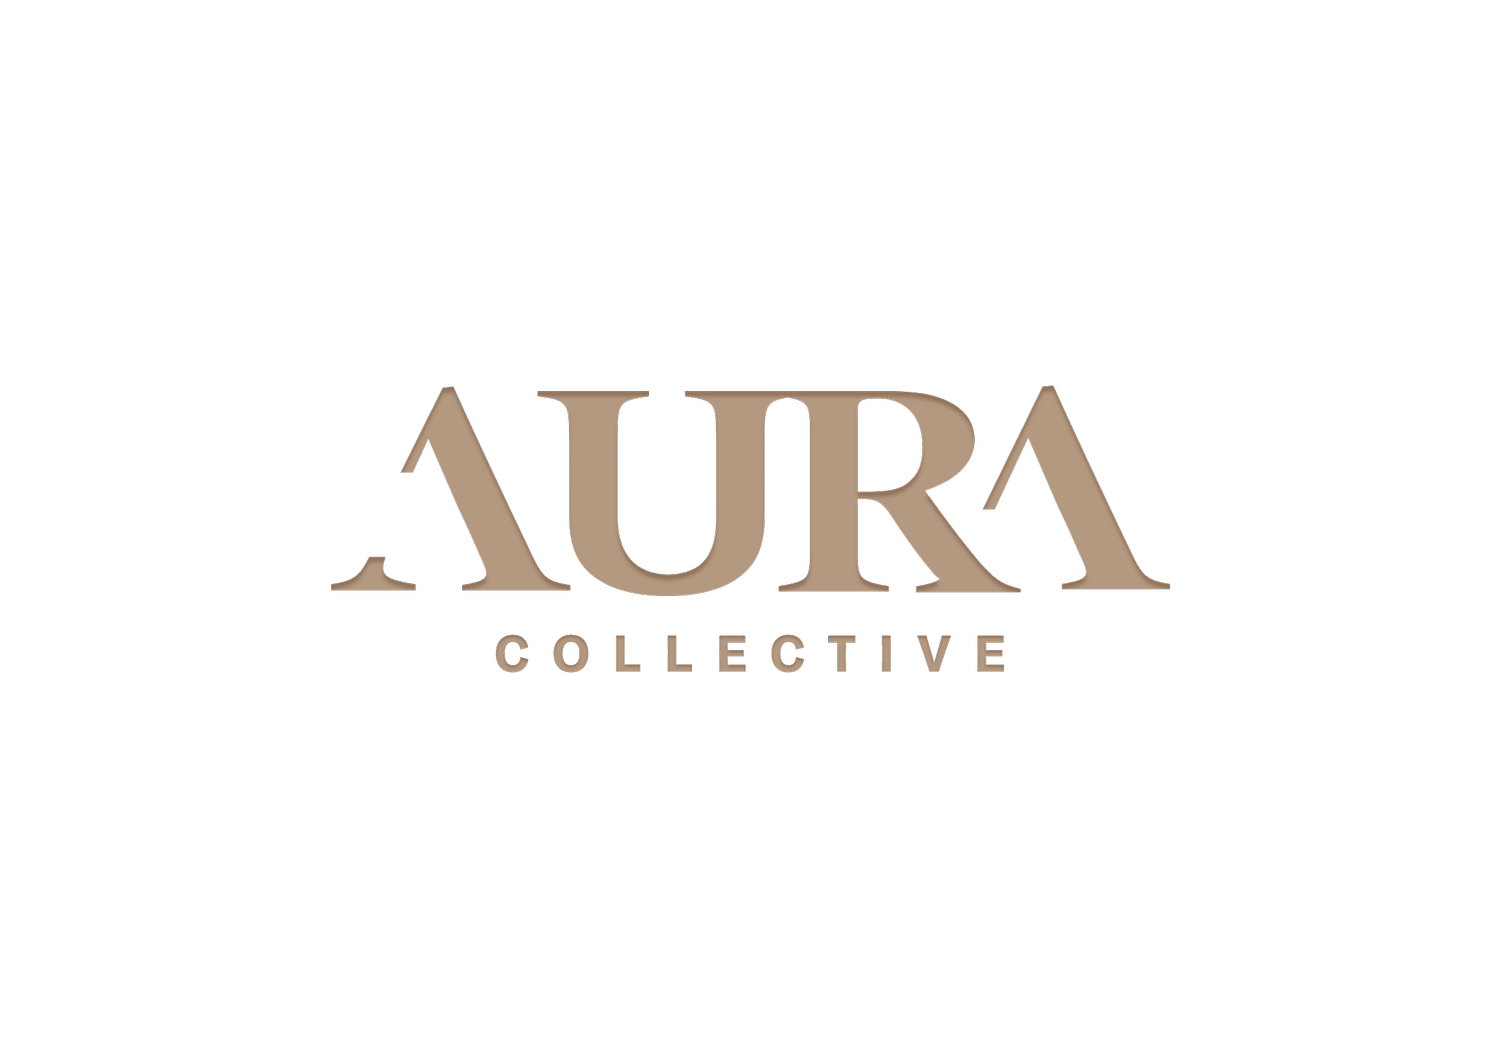 The Aura Collective